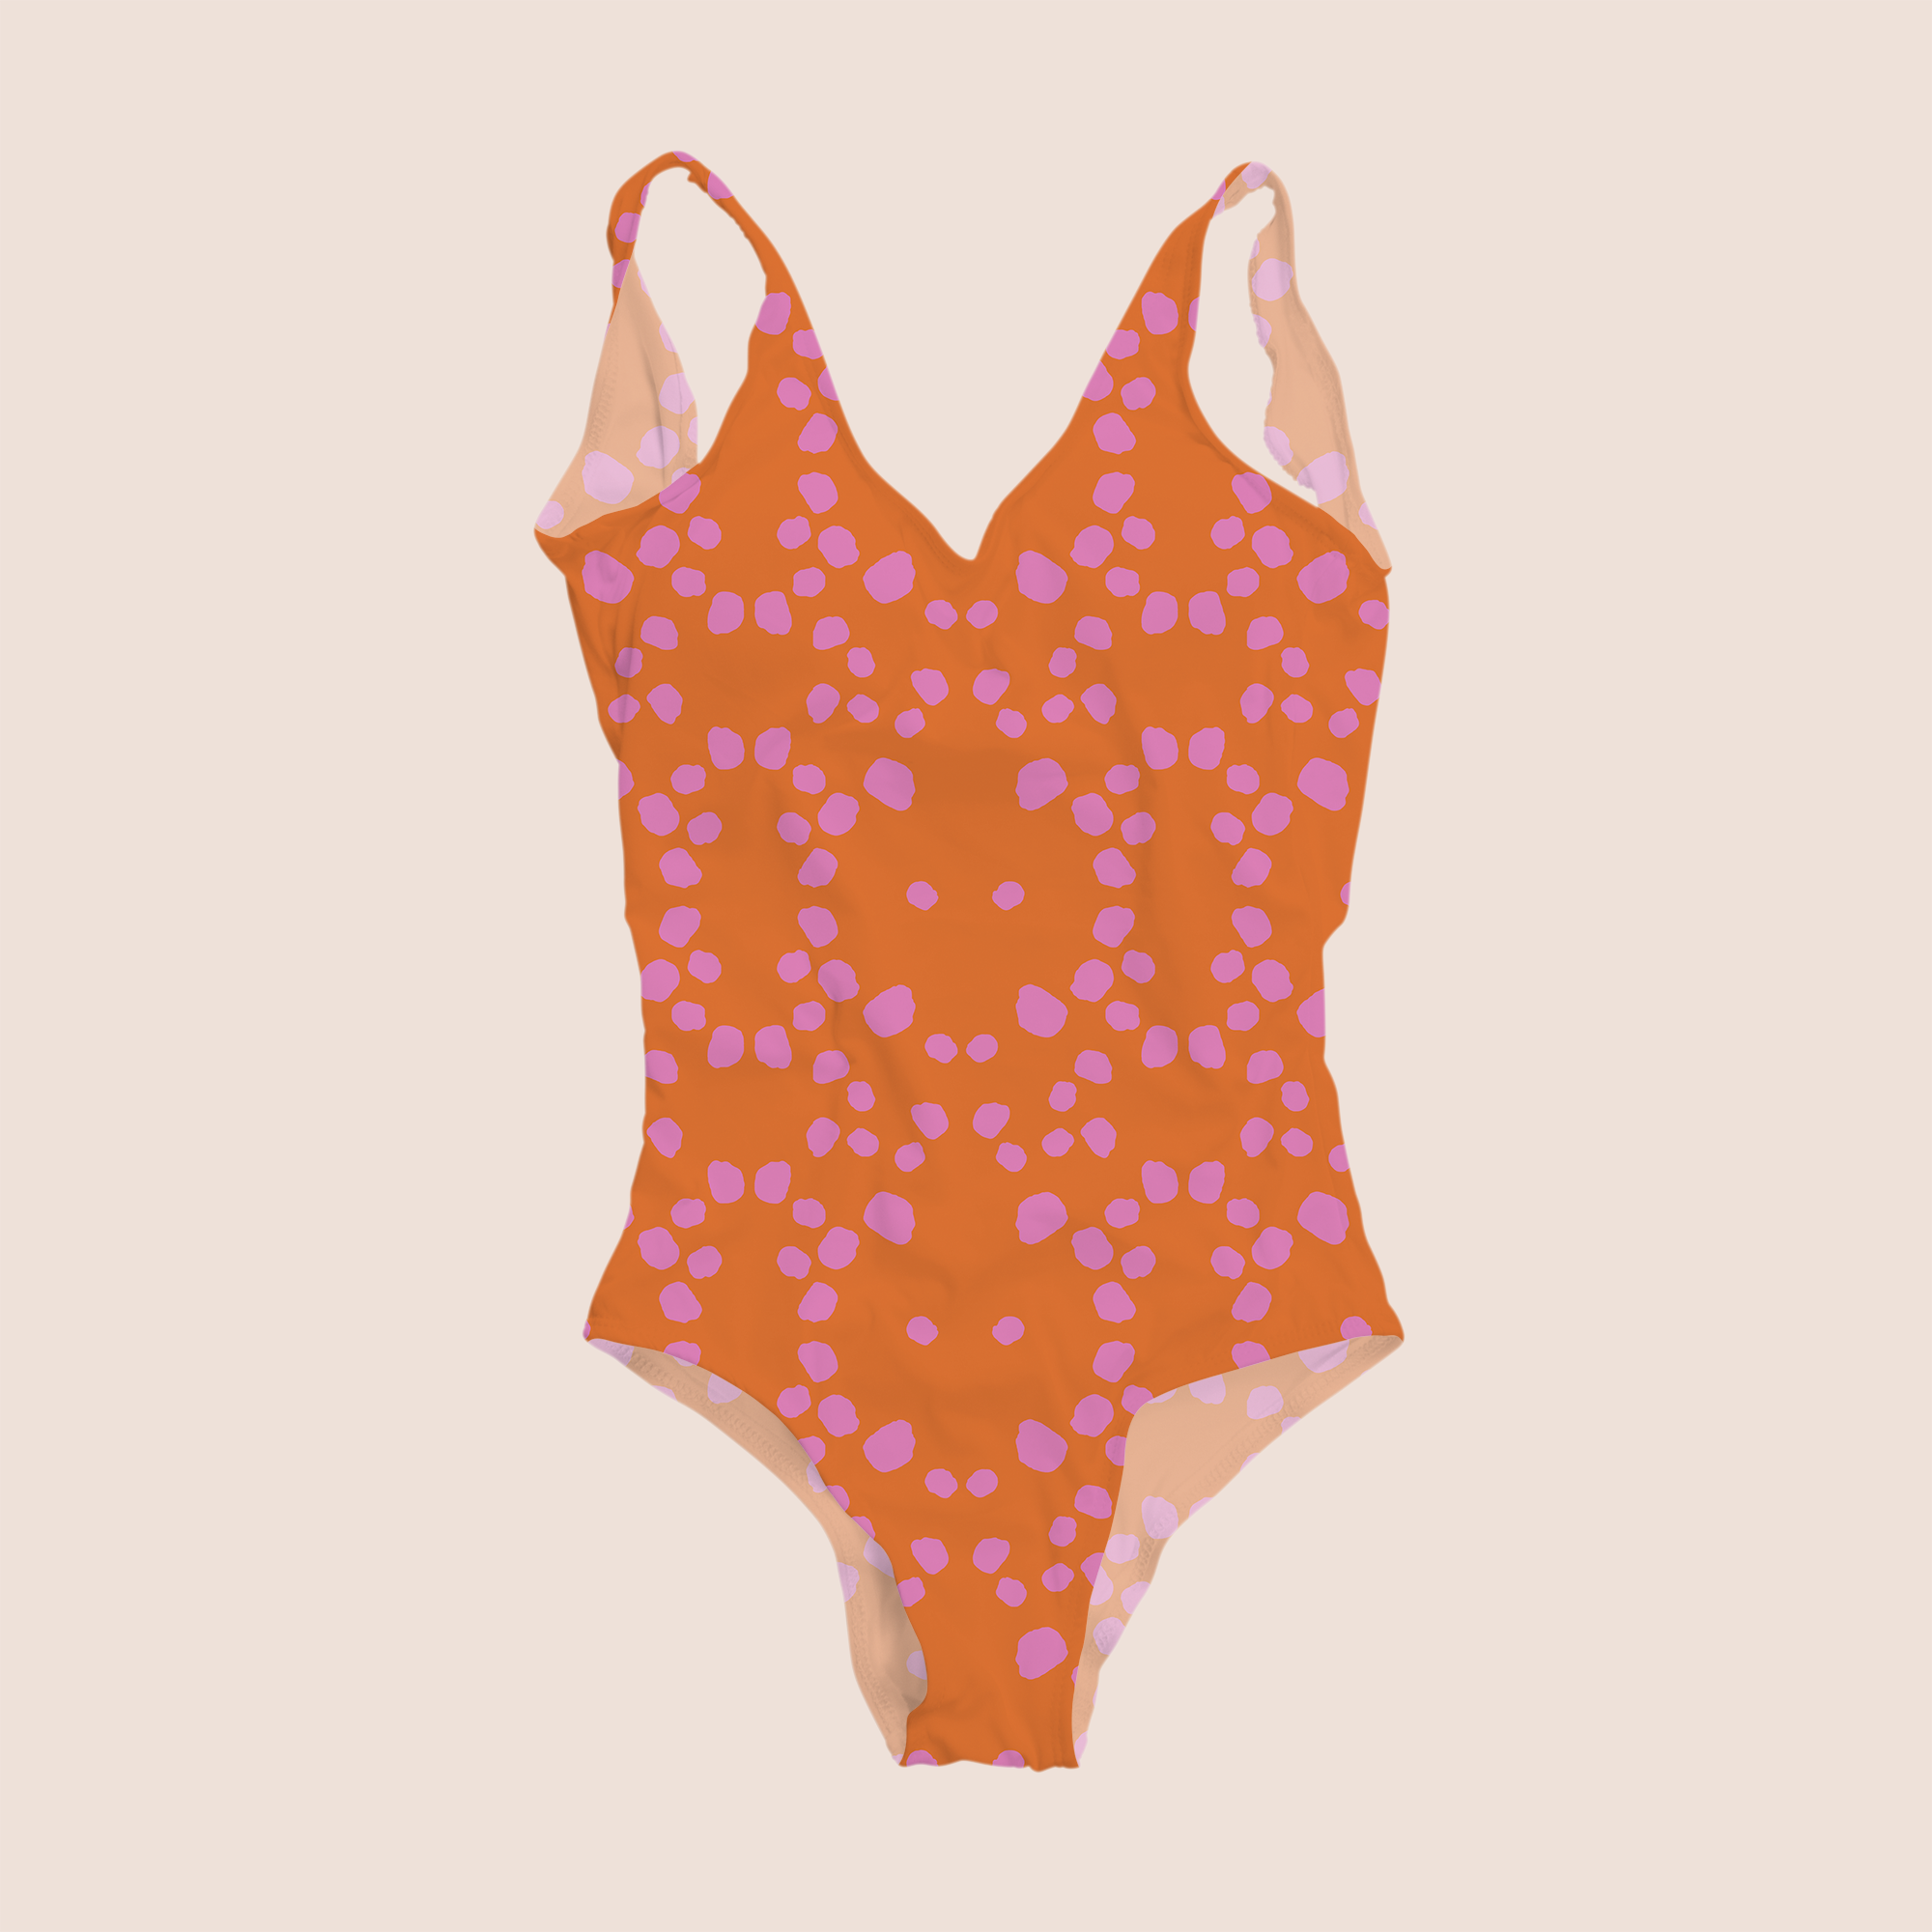 Animal skin digital in pink on orange design printed on recycled fabric swimsuit mockup